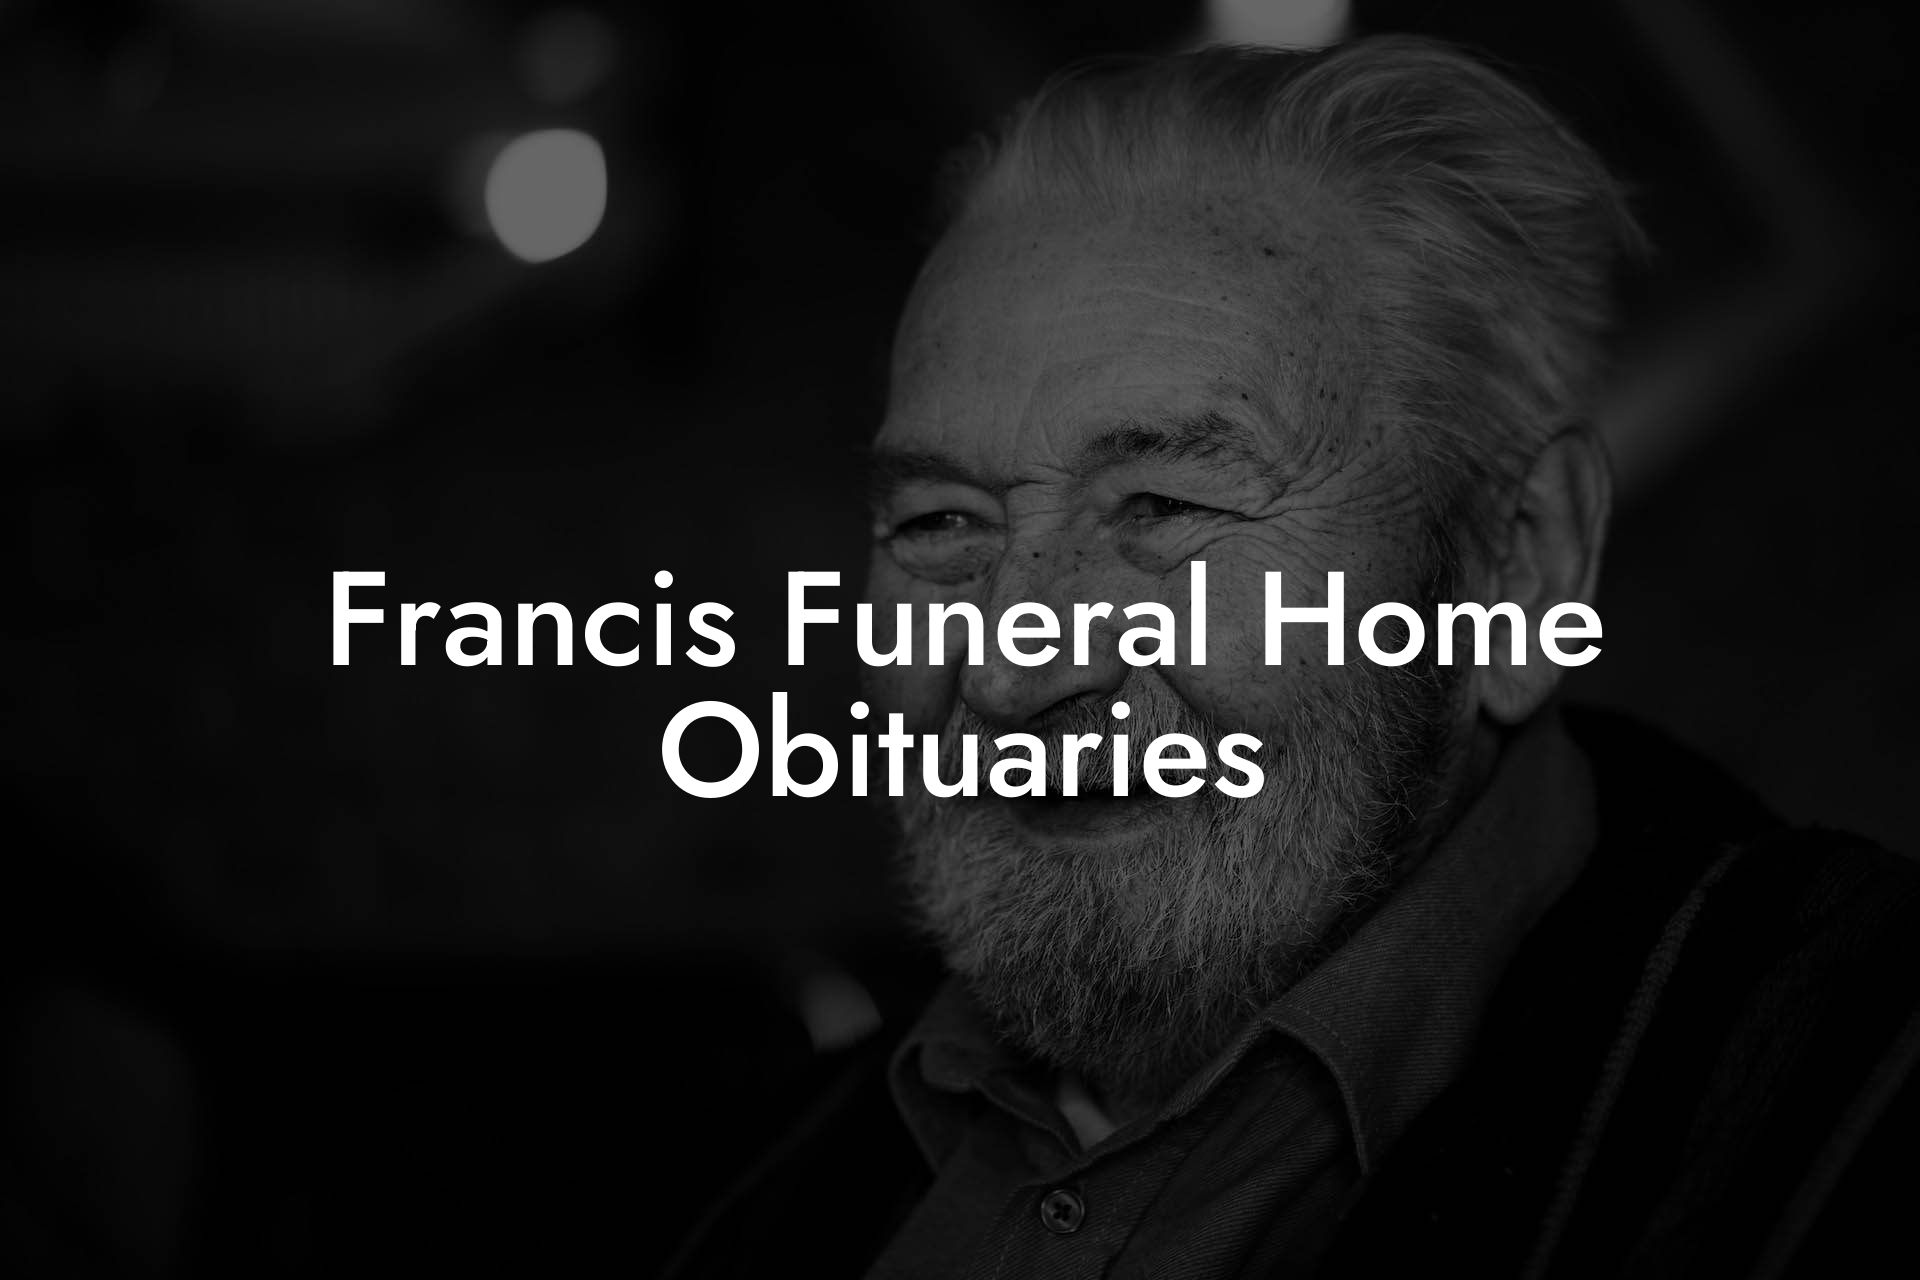 Francis Funeral Home Obituaries